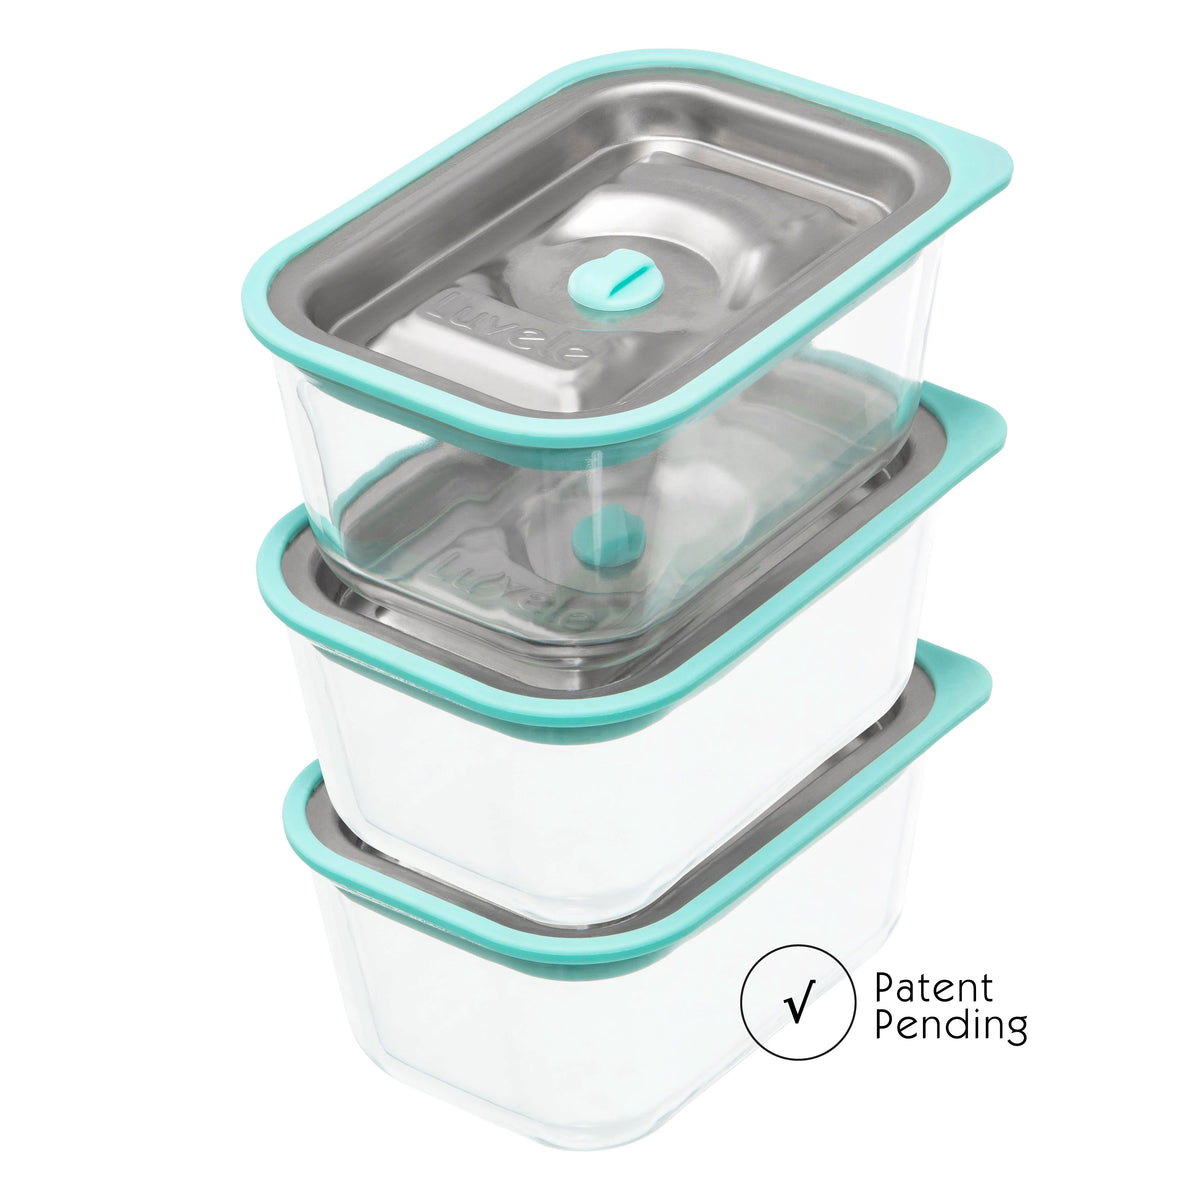 Potane Vacuum Seal Food Storage Container Set& Lunch Box